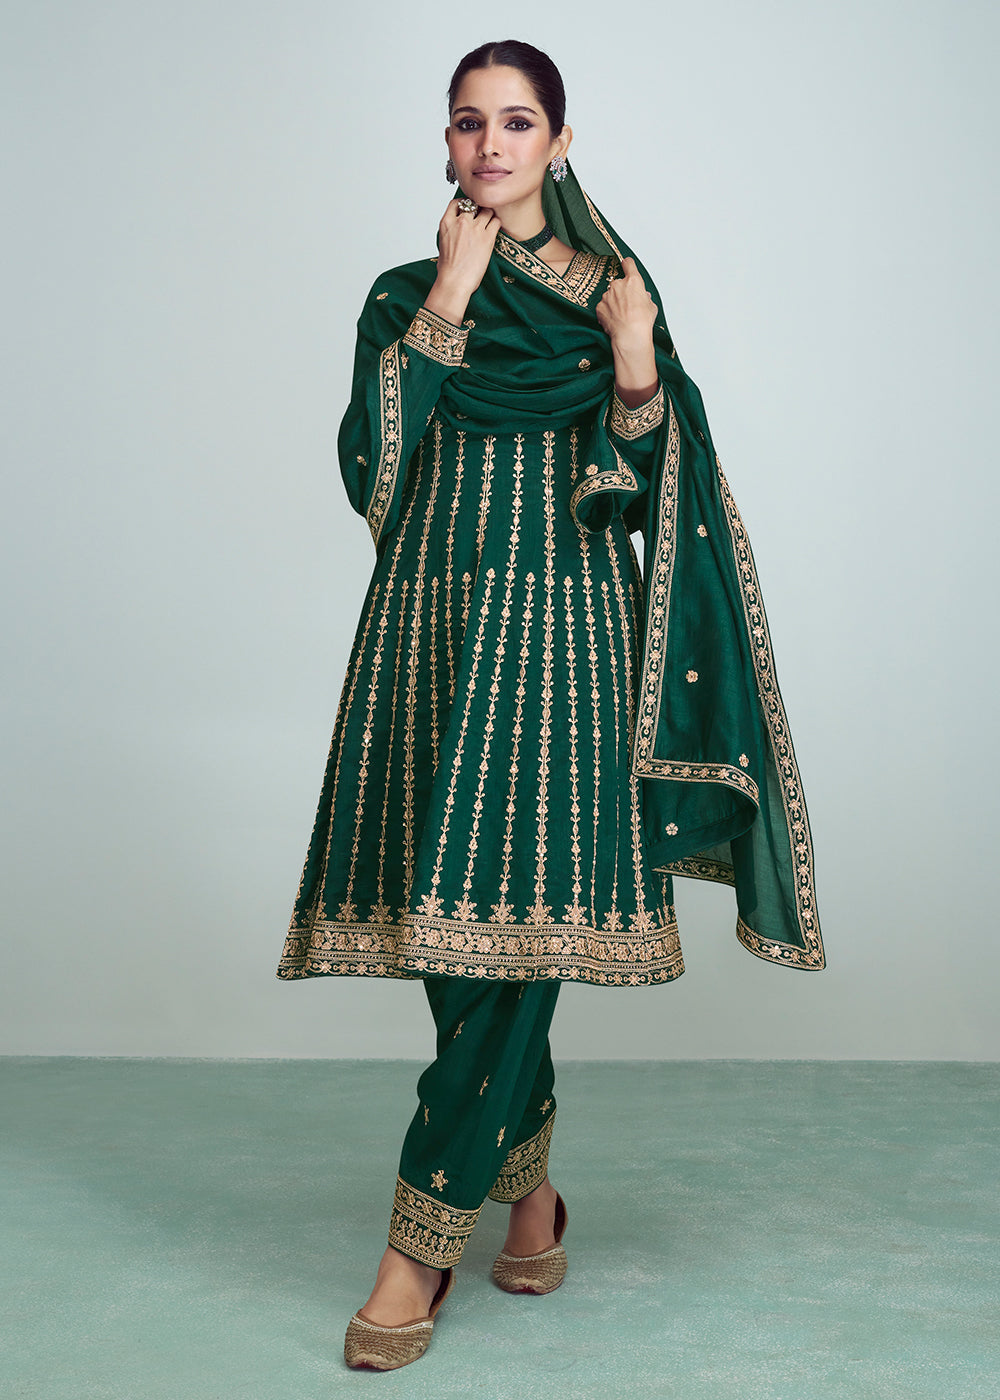 Buy Now Dark Green Silk Embroidered Peplum Punjabi Style Suit Online in USA, UK, Canada, Germany, Australia & Worldwide at Empress Clothing.